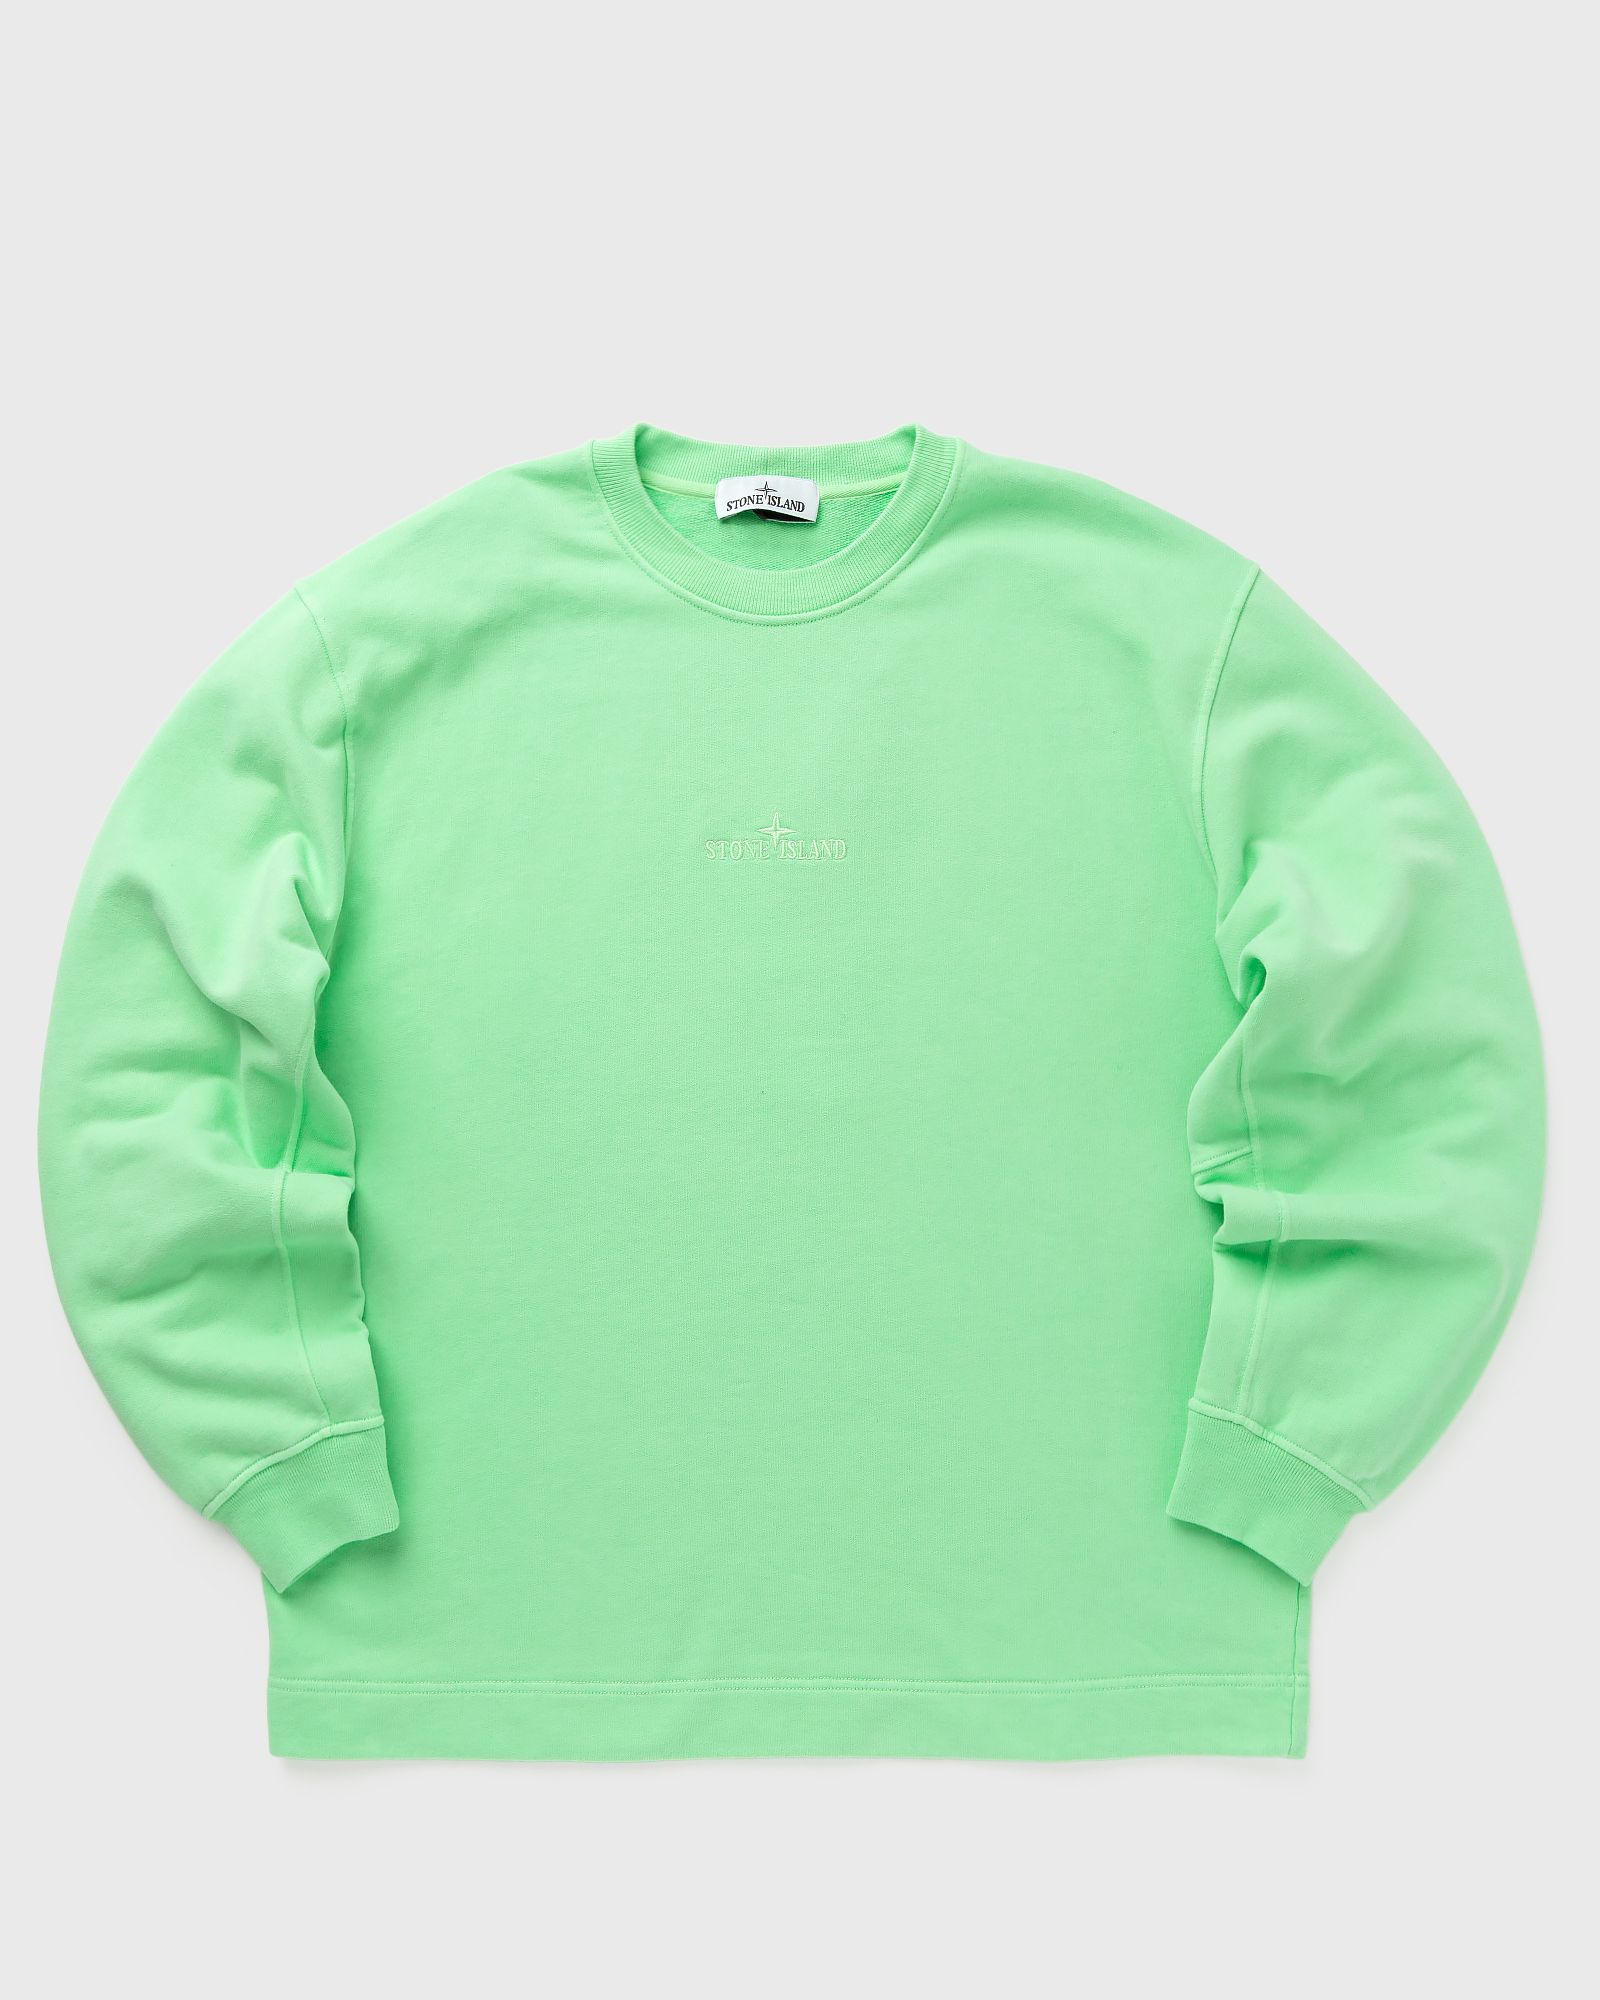 Stone Island - sweat-shirt brushed cotton fleece, garment dyed men sweatshirts green in größe:s